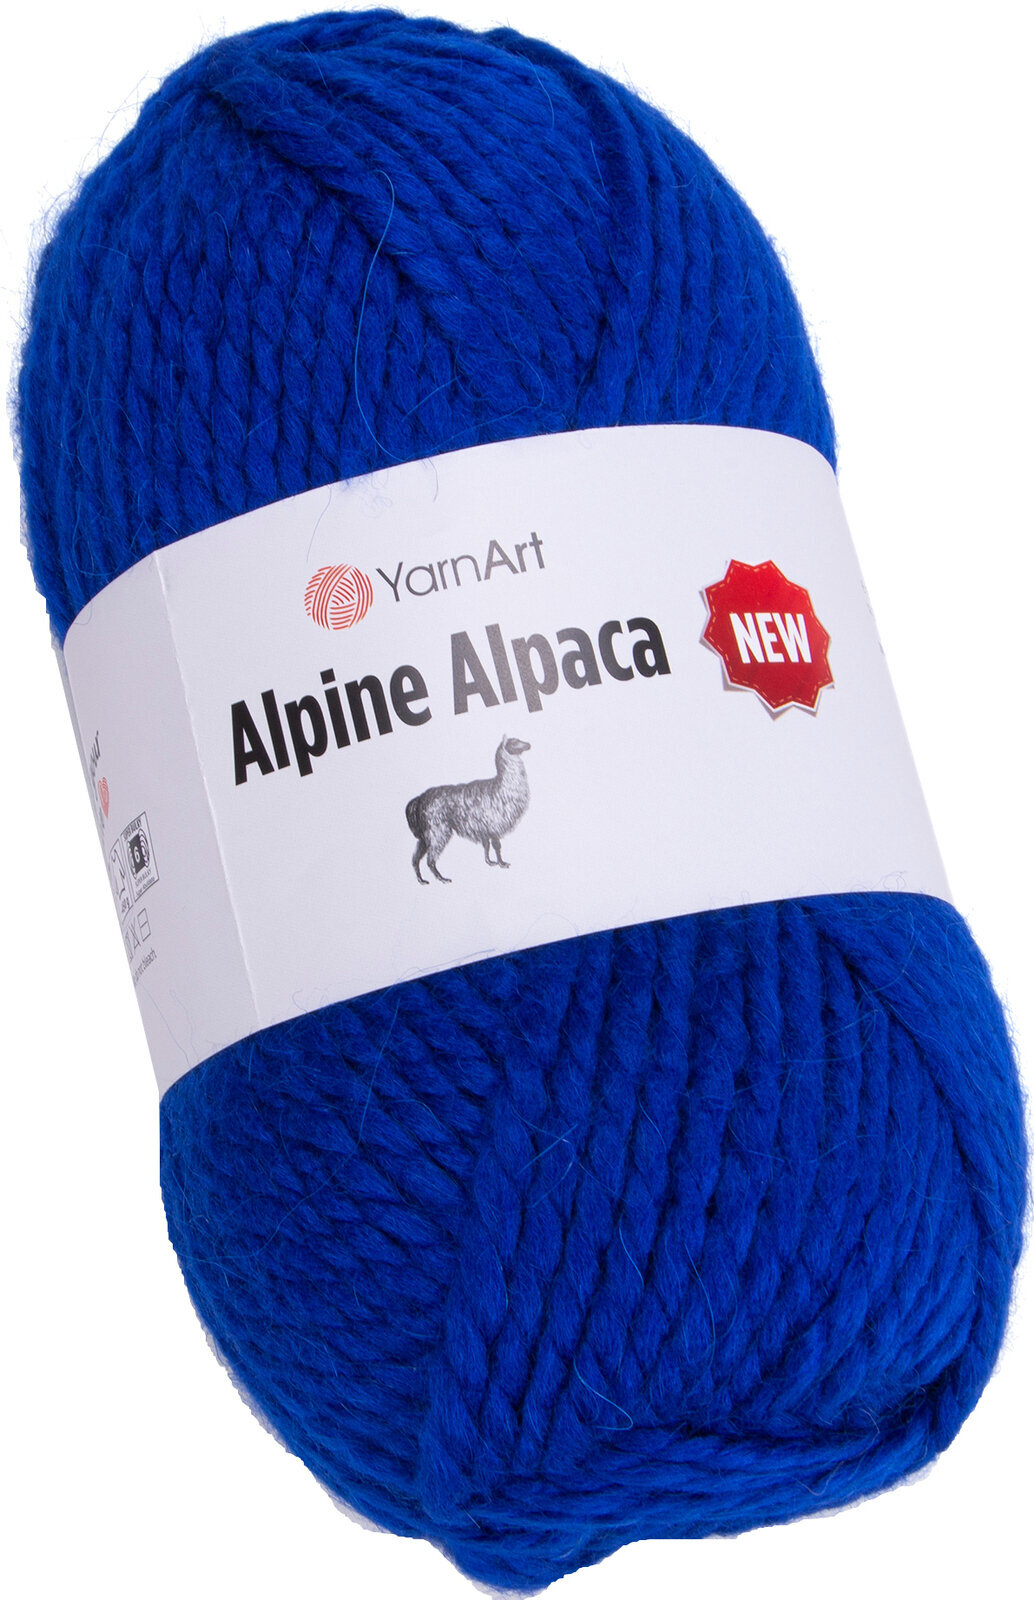 Breigaren Yarn Art Alpine Alpaca New 1442